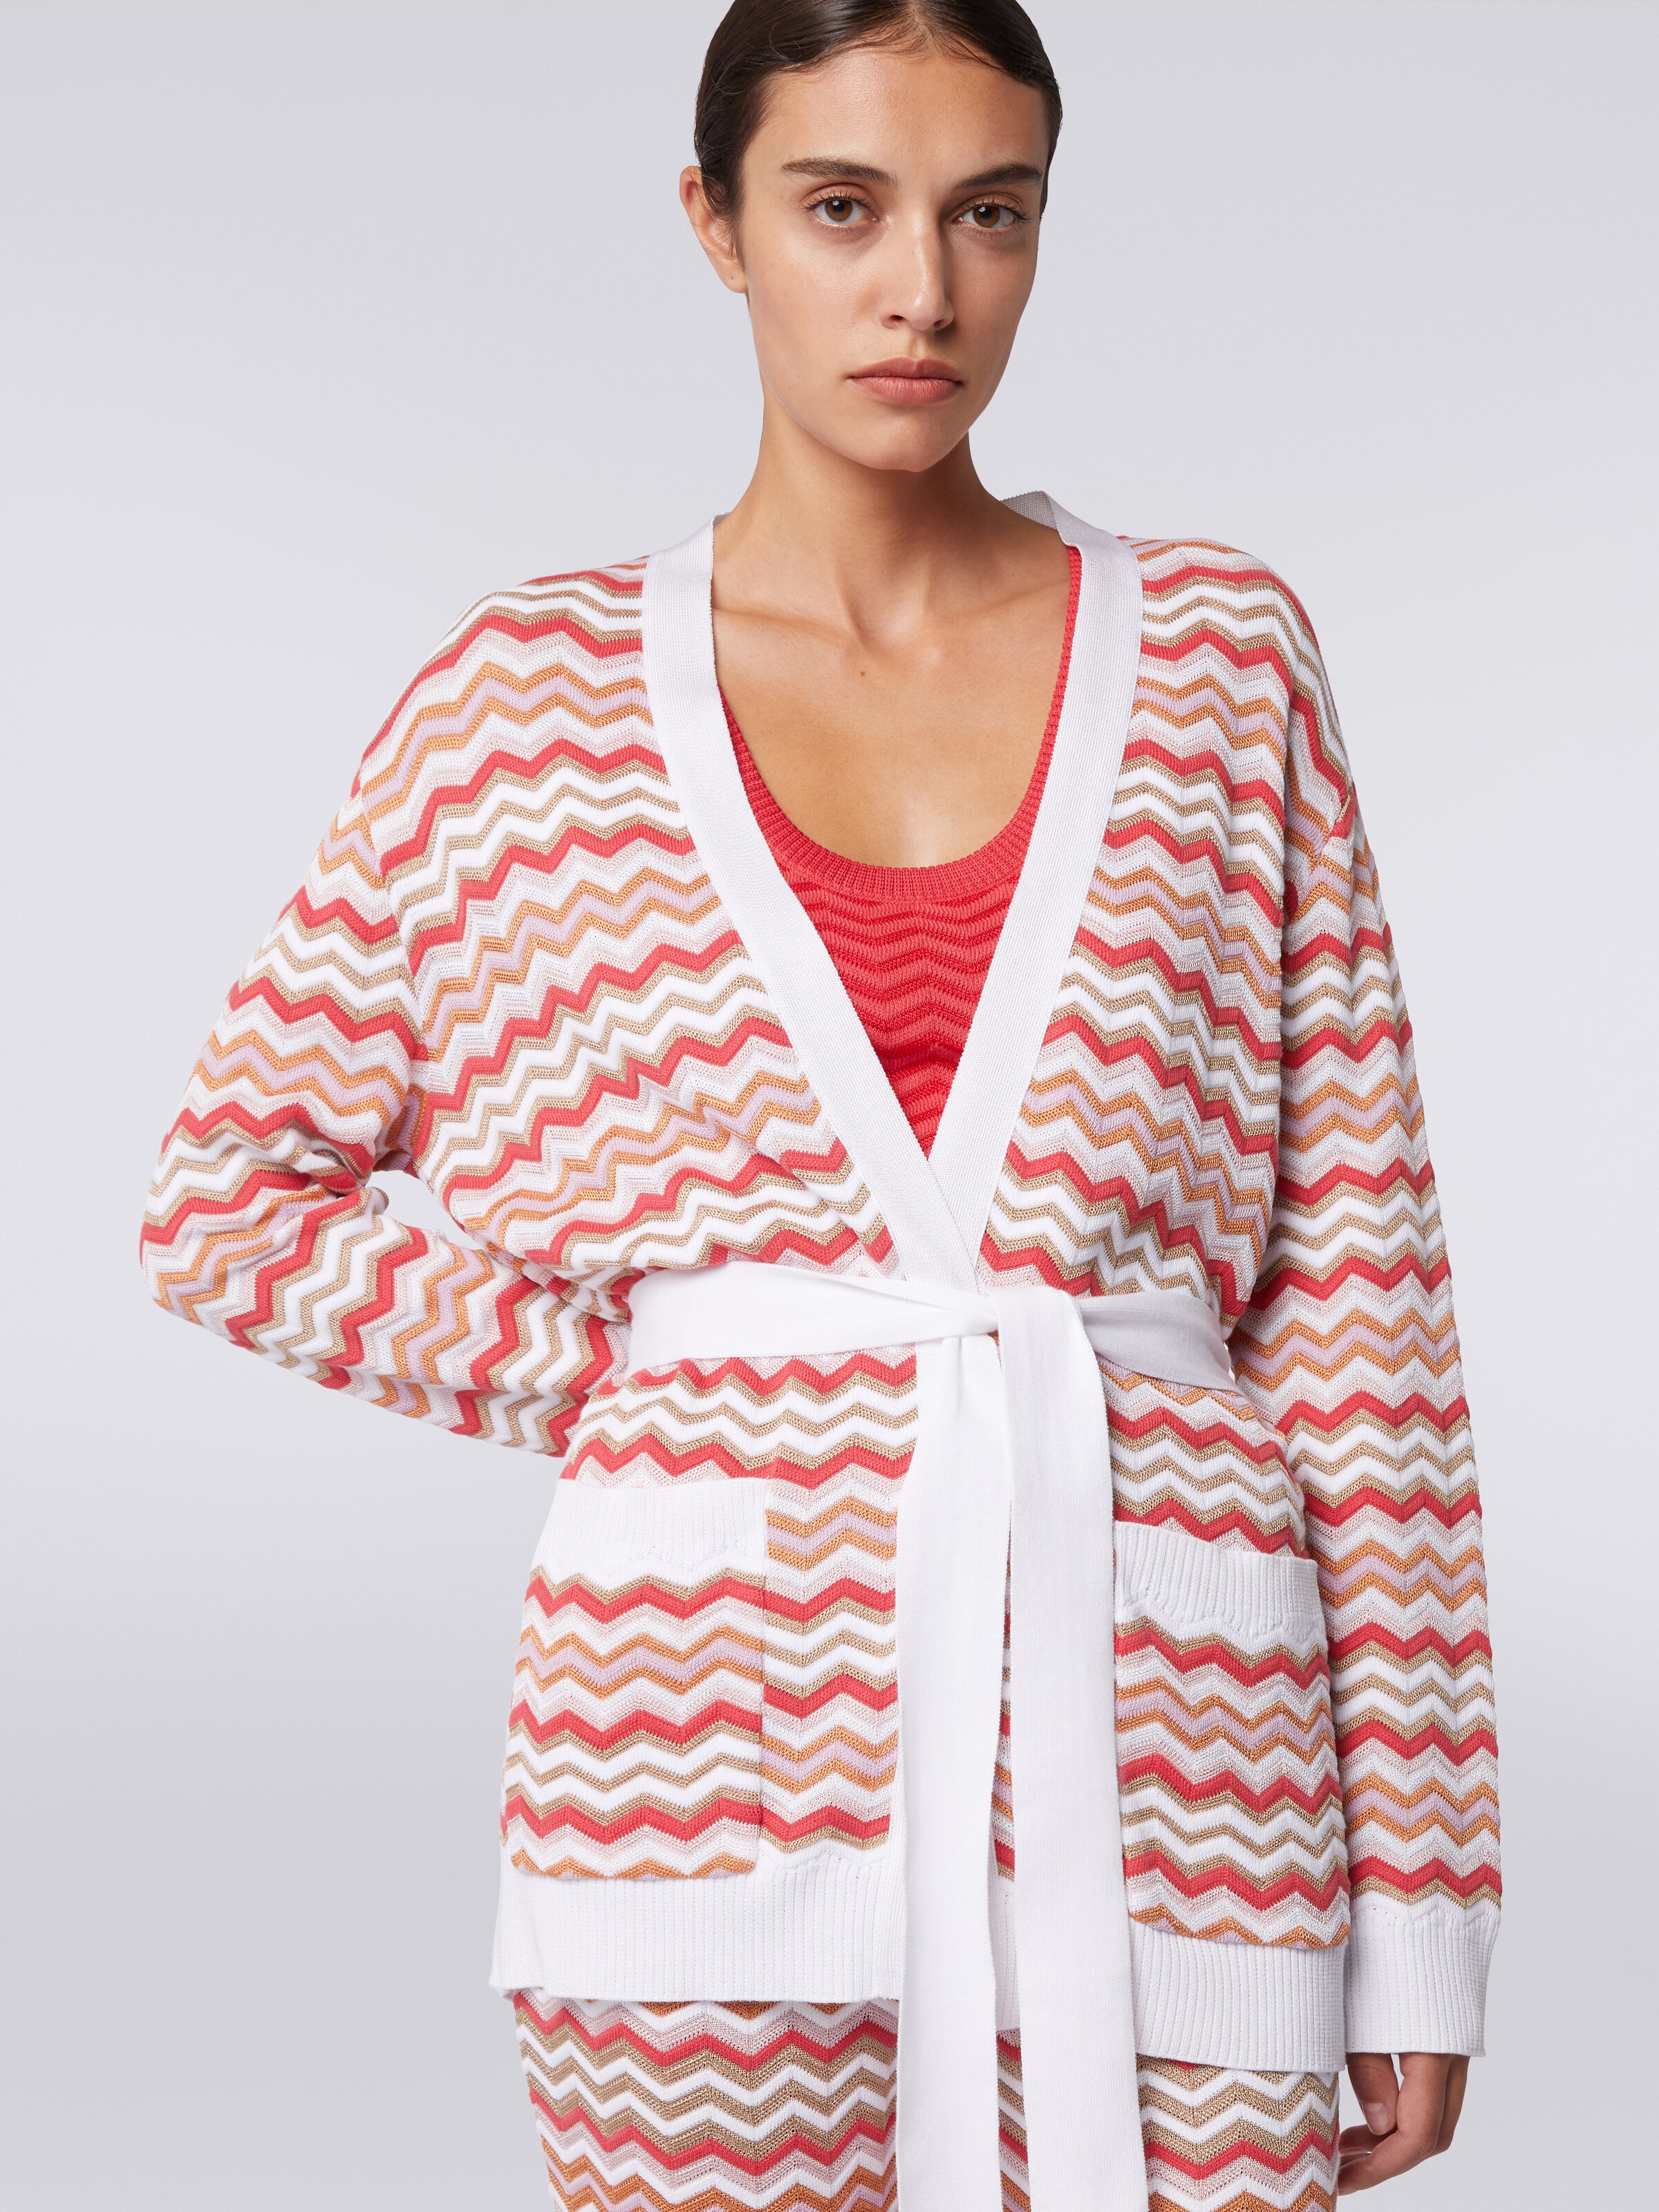 Cardigan in zigzag viscose and cotton knit , Multicoloured  - 4